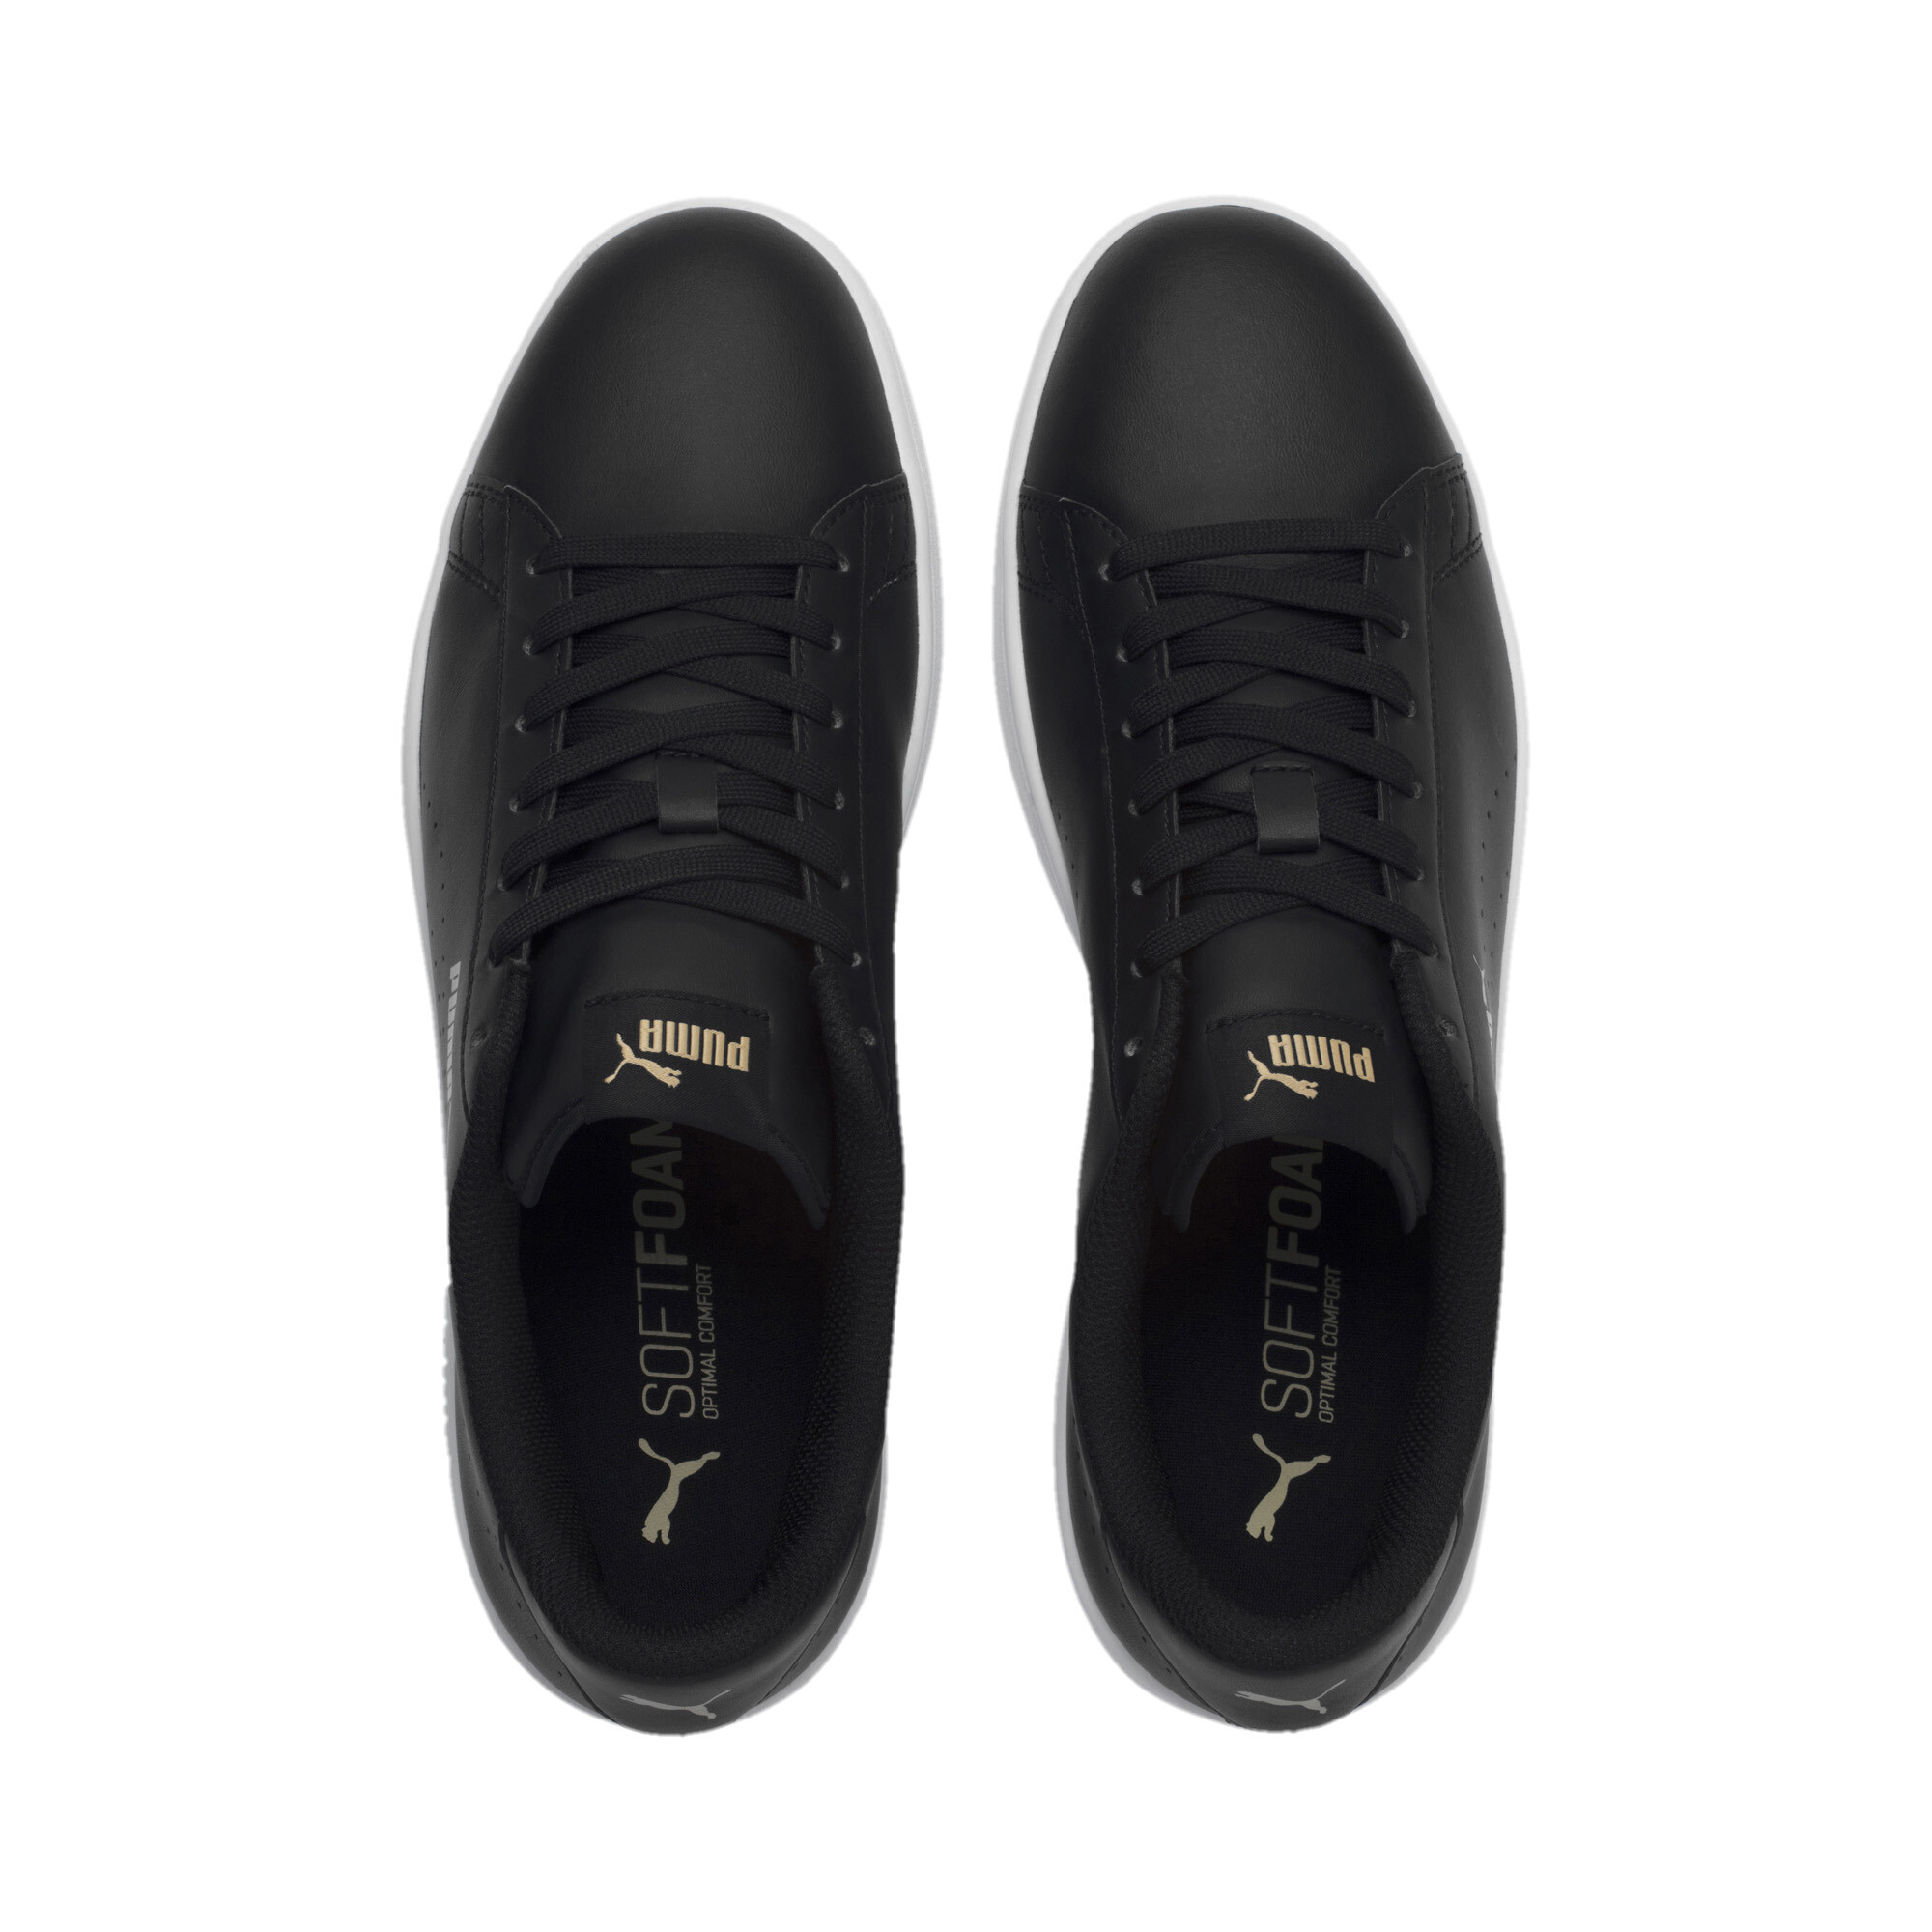 PUMA PUMA Smash v2 Leather Perf Sneakers Men Shoe Basics | eBay